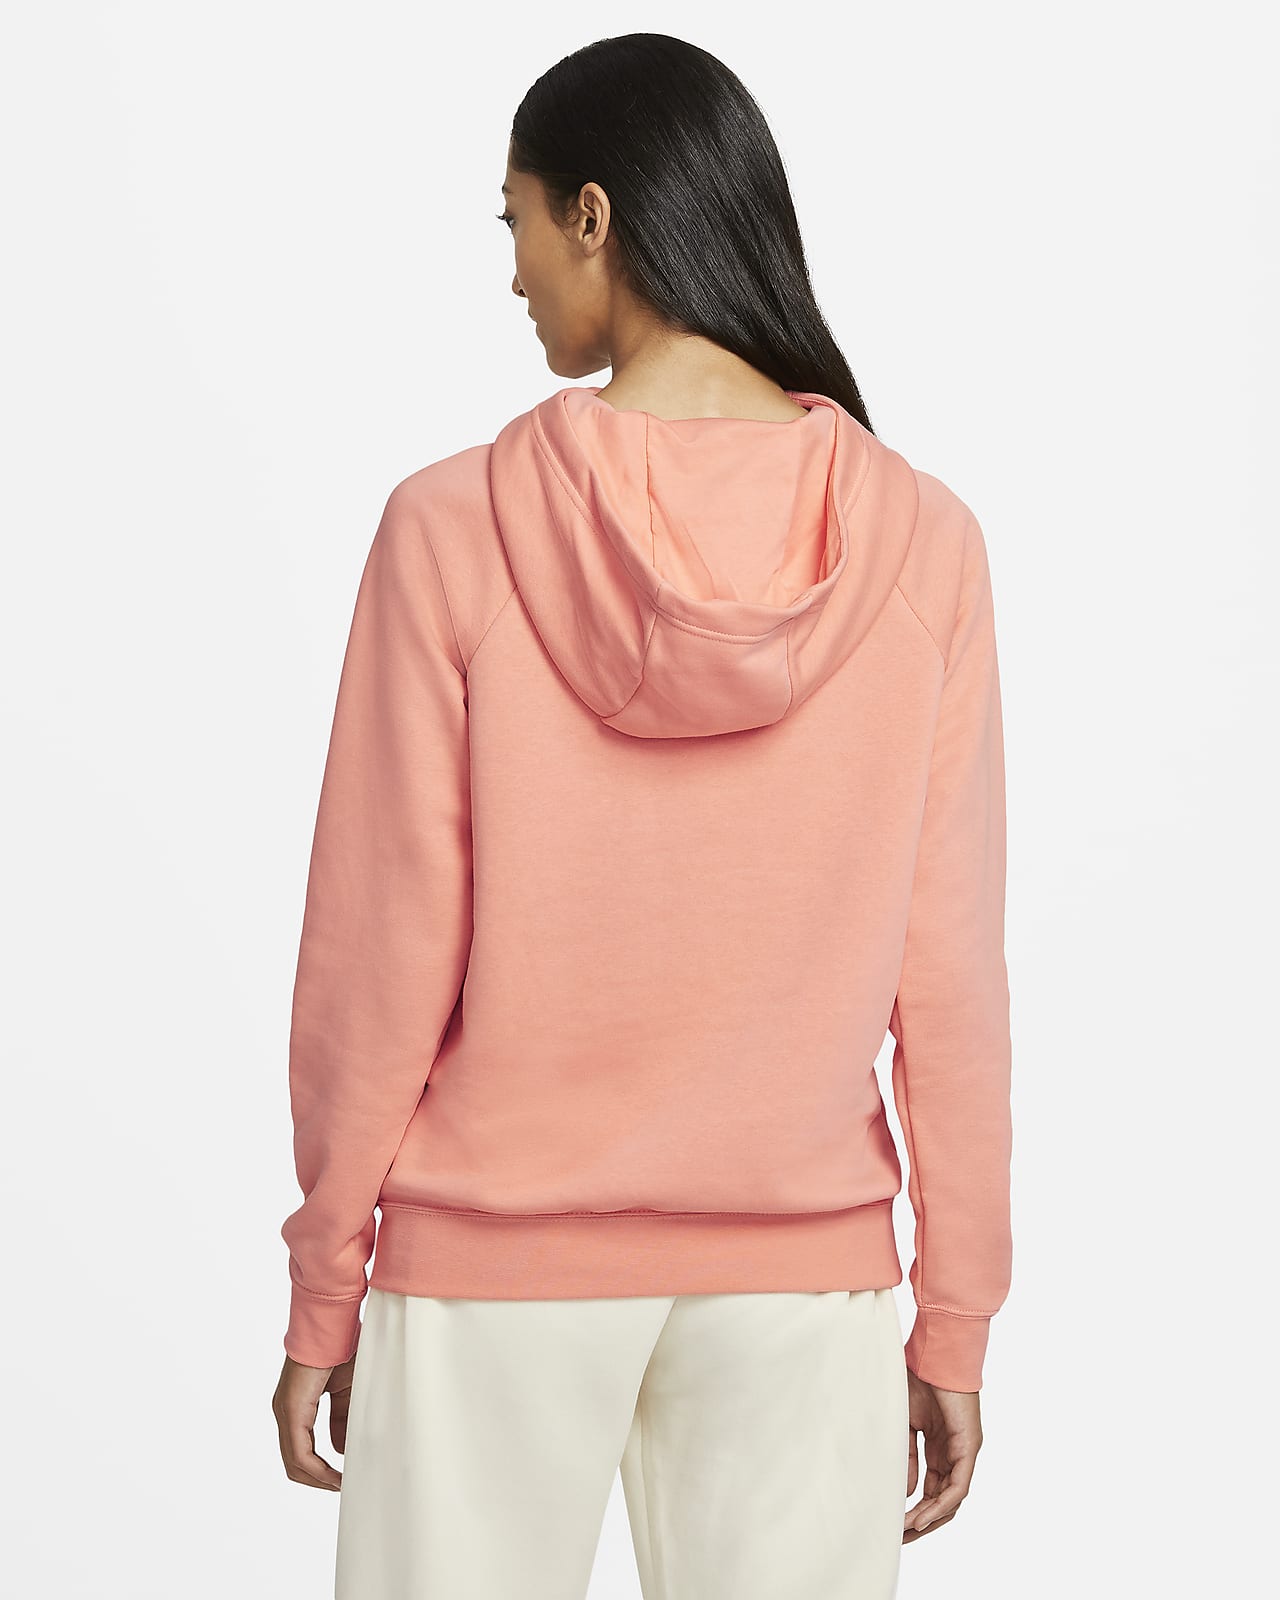 nike women's essential fleece sweatshirt